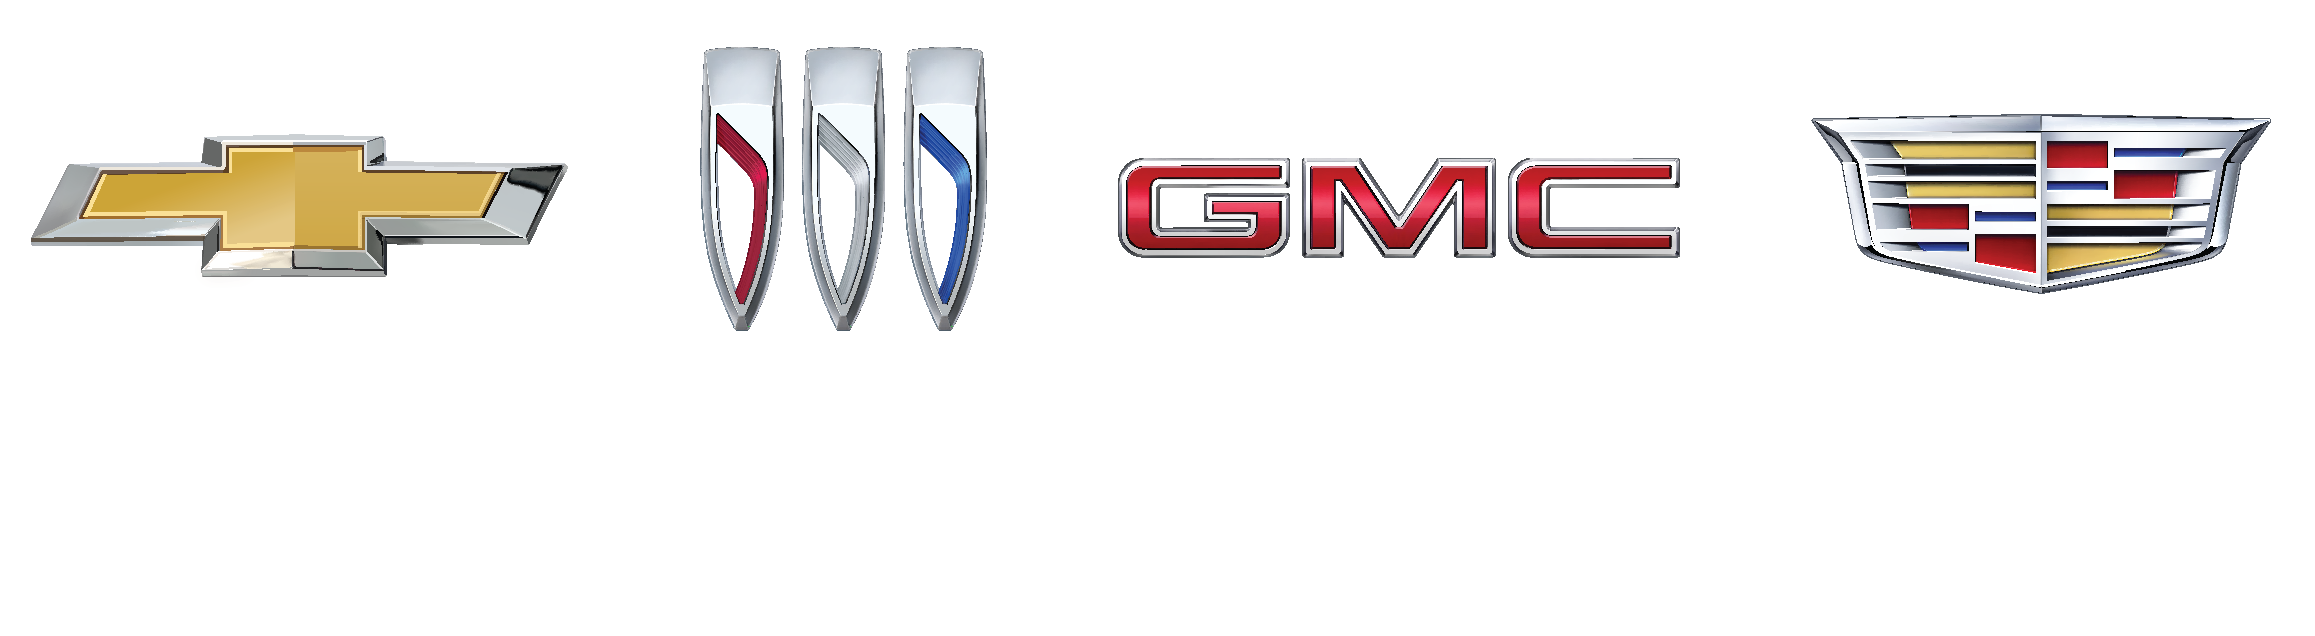 General Motors brands